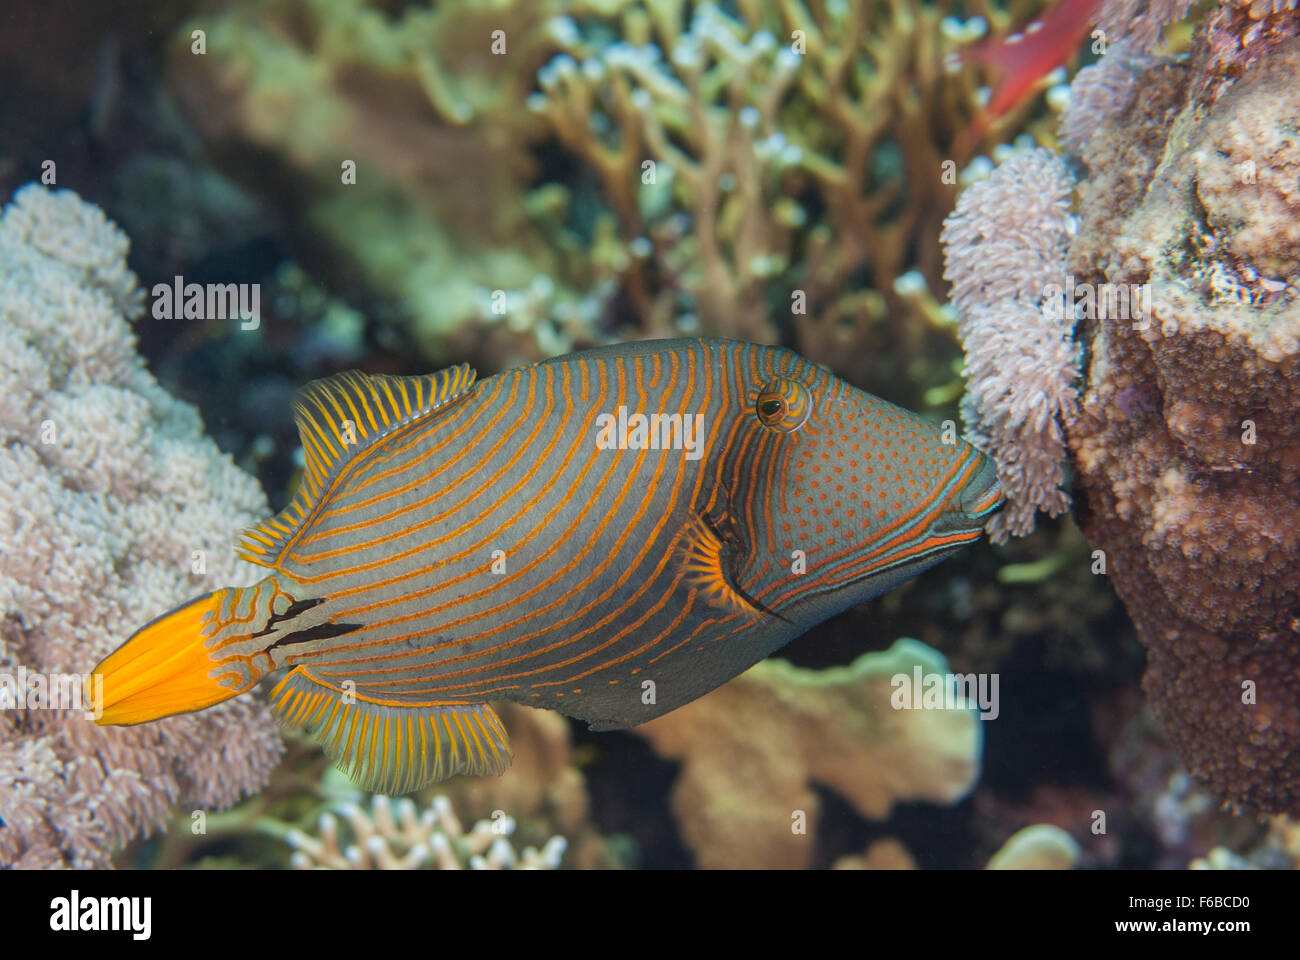 Orange-striped triggerfish, Balistapus undulatus, Balistidae, Sharm el- Sheikh, Red Sea, Egypt Stock Photo